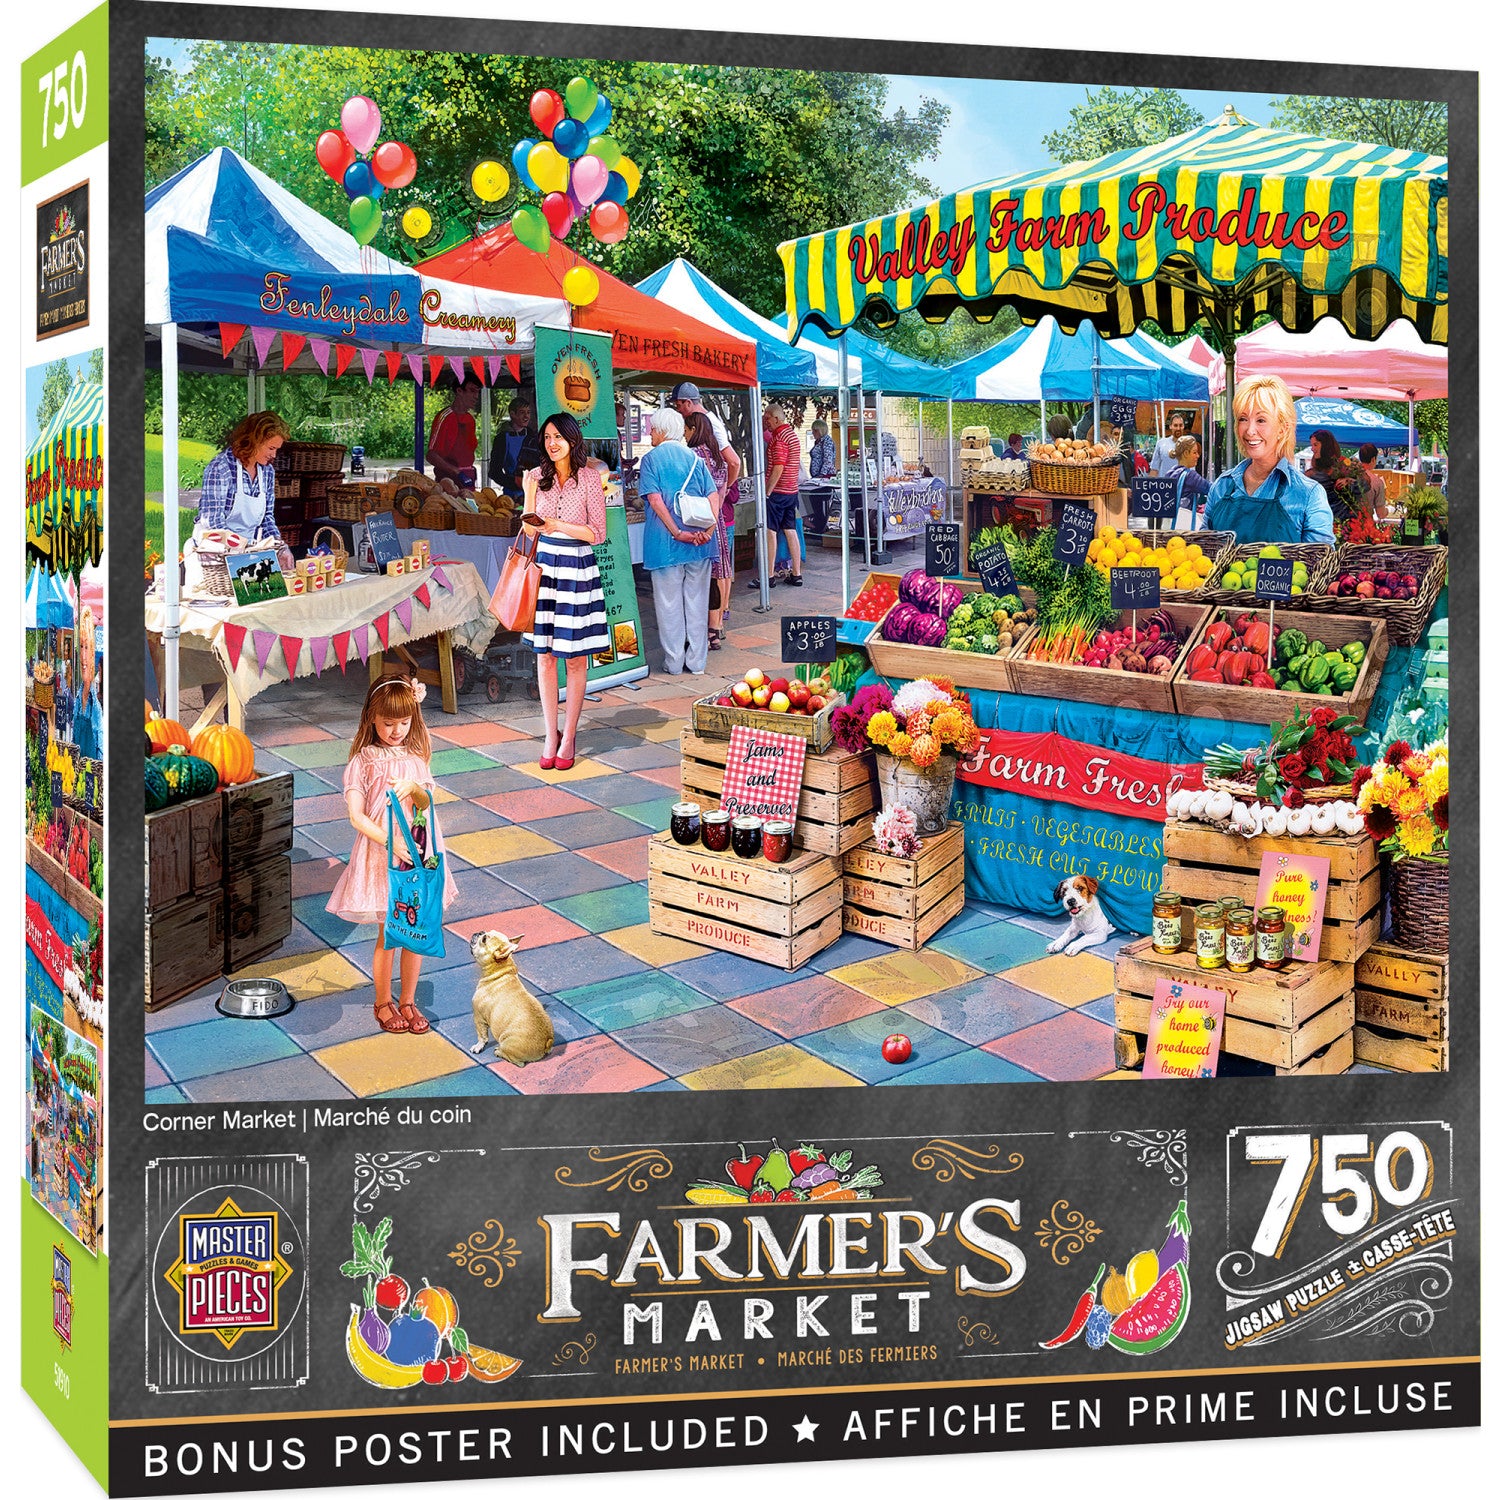 Farmer's Market - Corner Market 750 Piece Jigsaw Puzzle